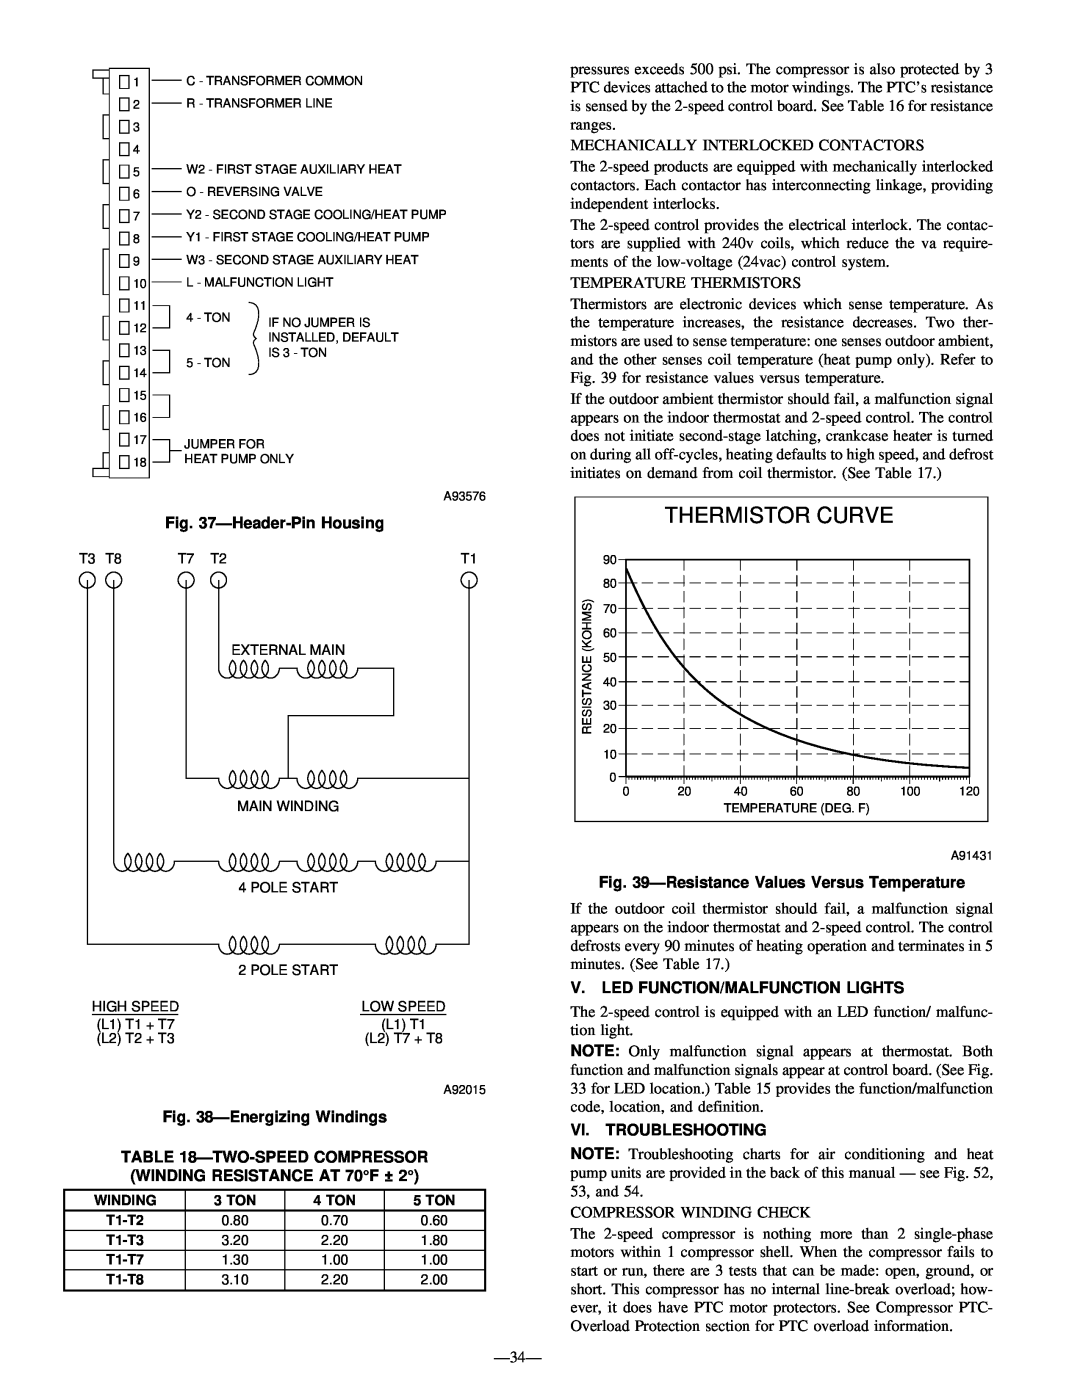 Bryant R-22 service manual Thermistor Curve, Header-PinHousing, EnergizingWindings, ResistanceValues Versus Temperature 